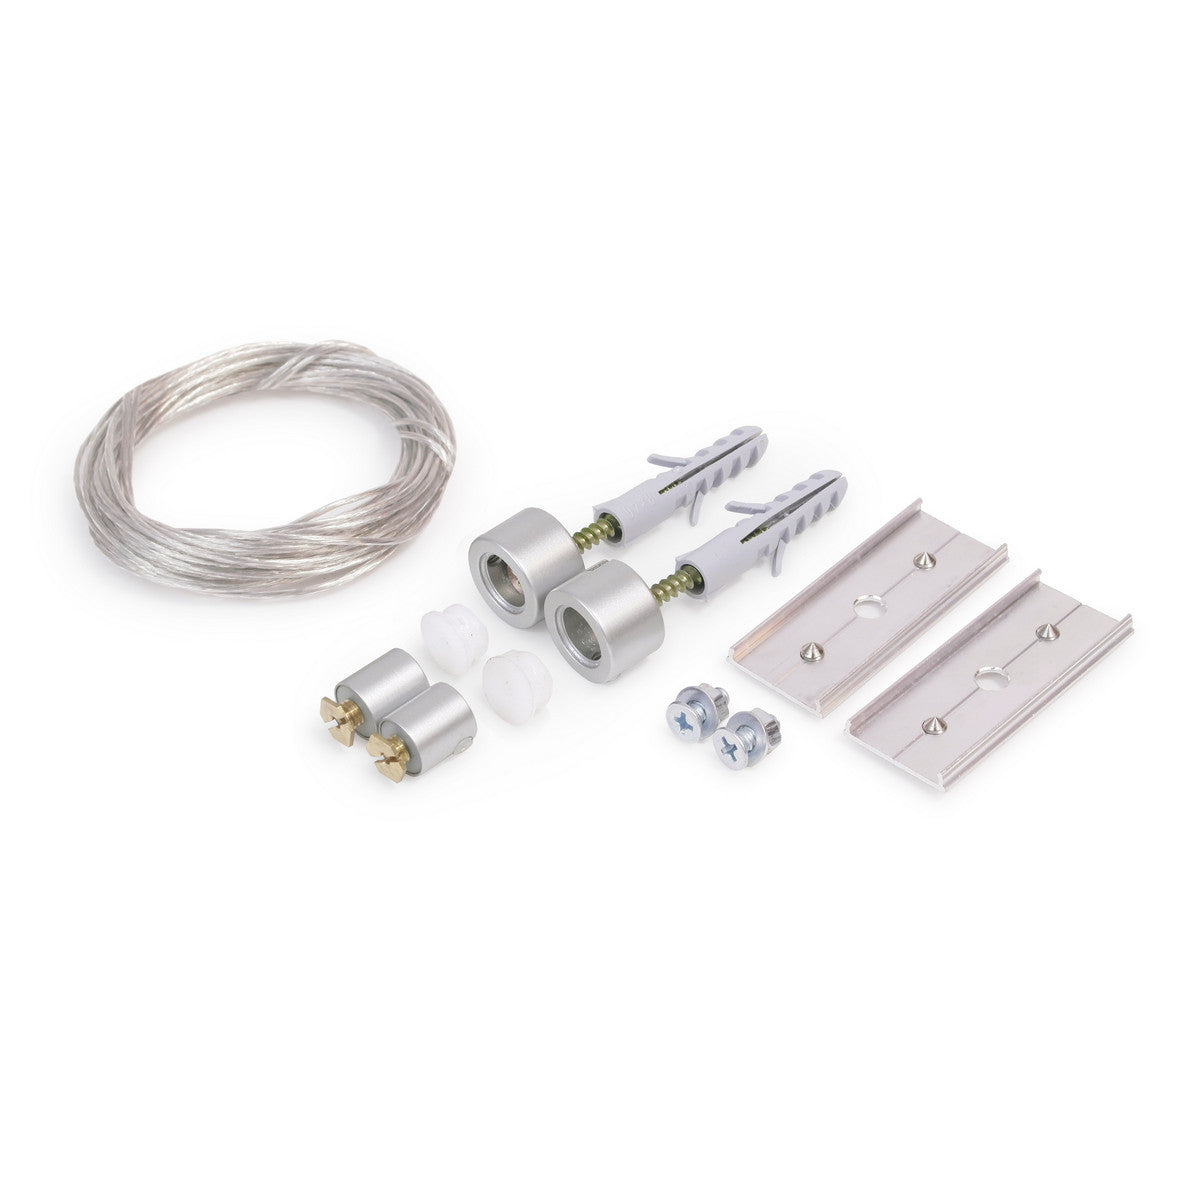 Electrical Suspension Kit (SELV)